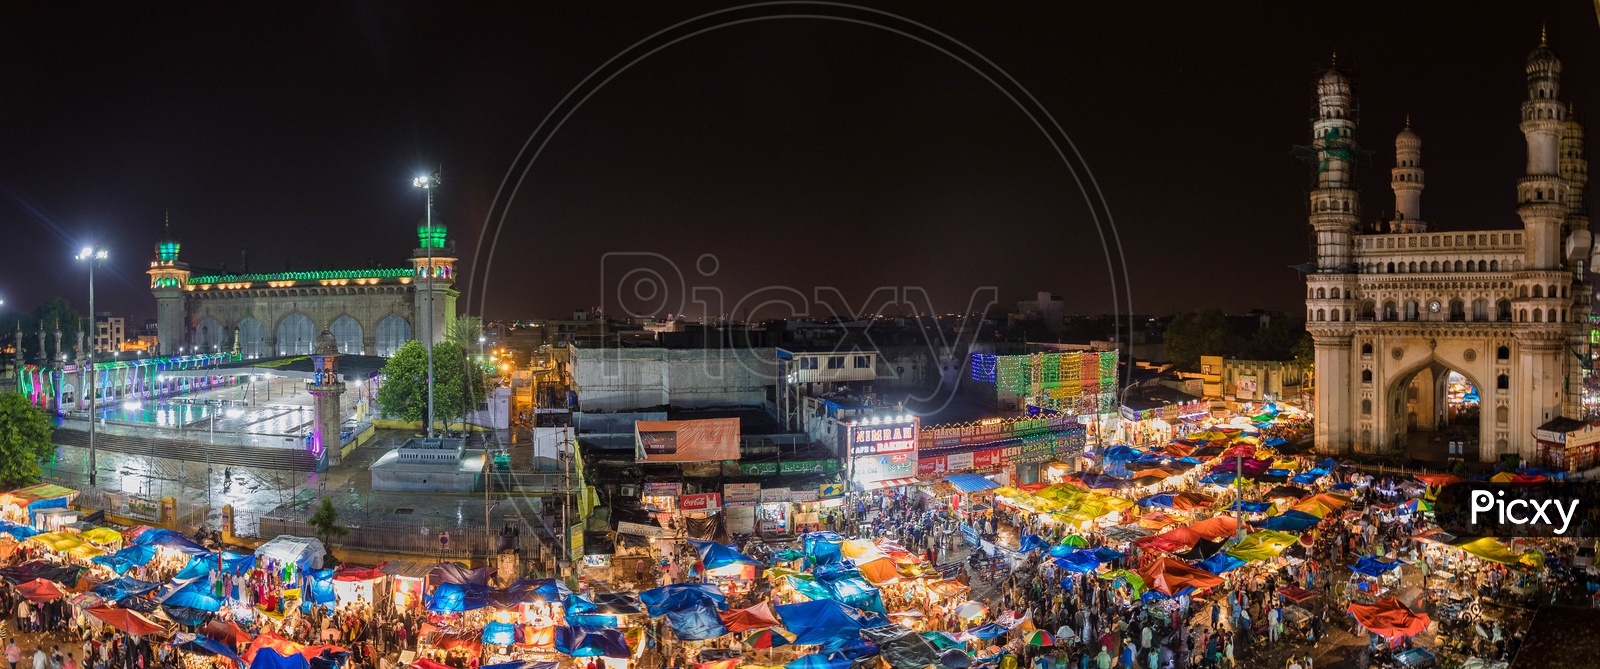 Panaromic View Of Charminar And Street With Stalls During Ramzan Season